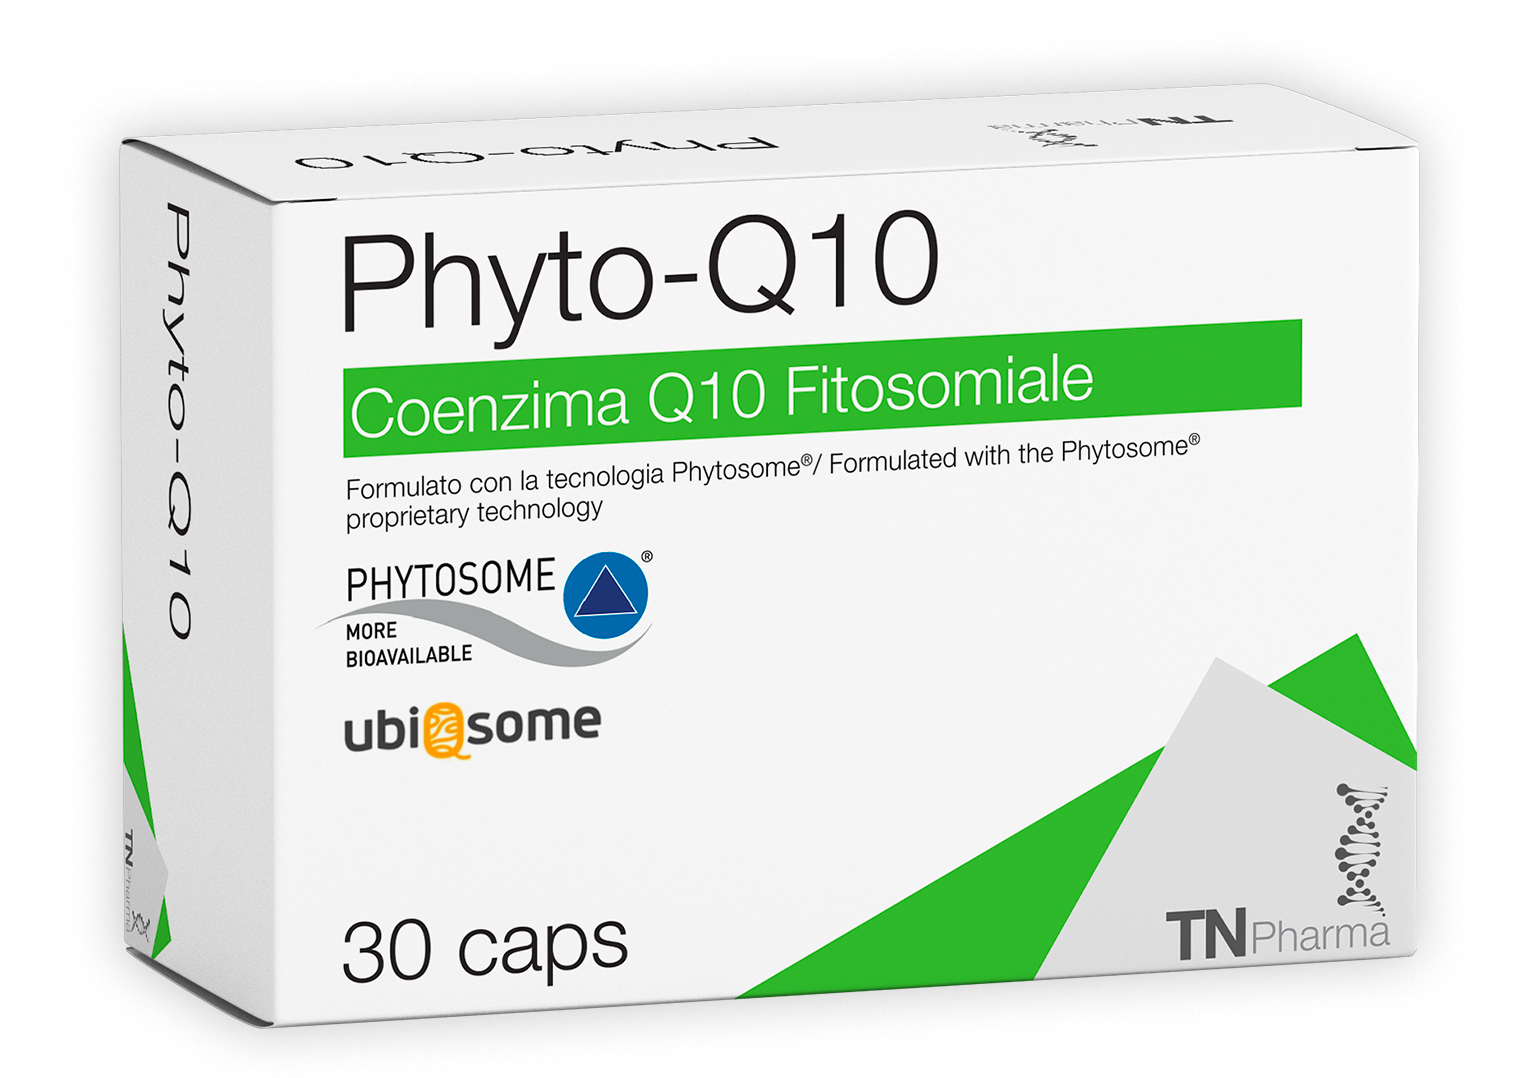 Phyto-Q10 30 caps